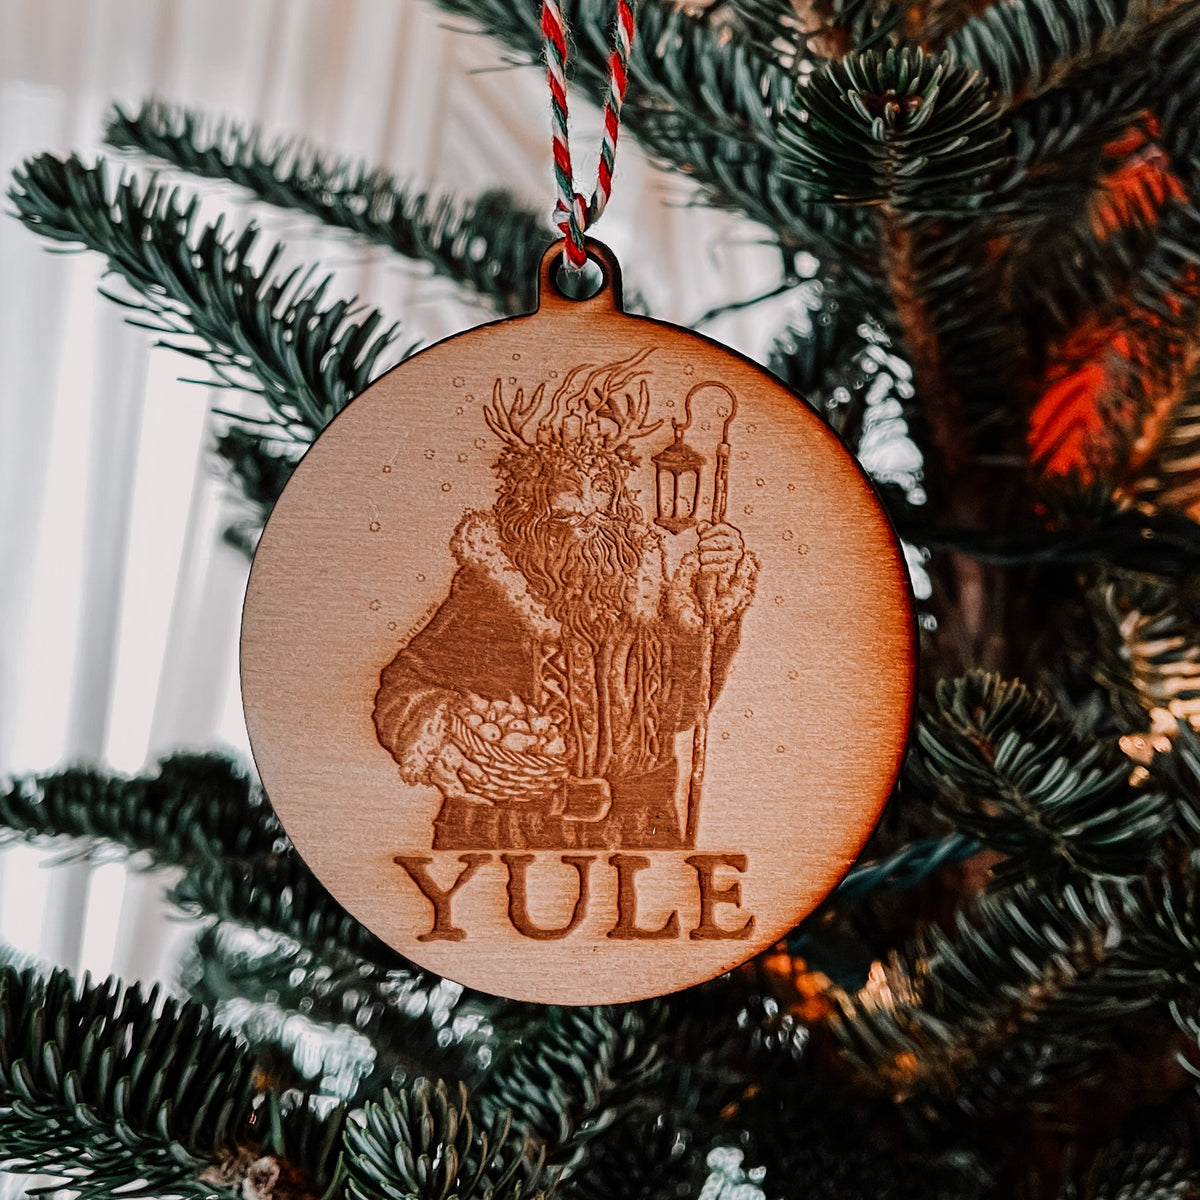 Yule Ornament